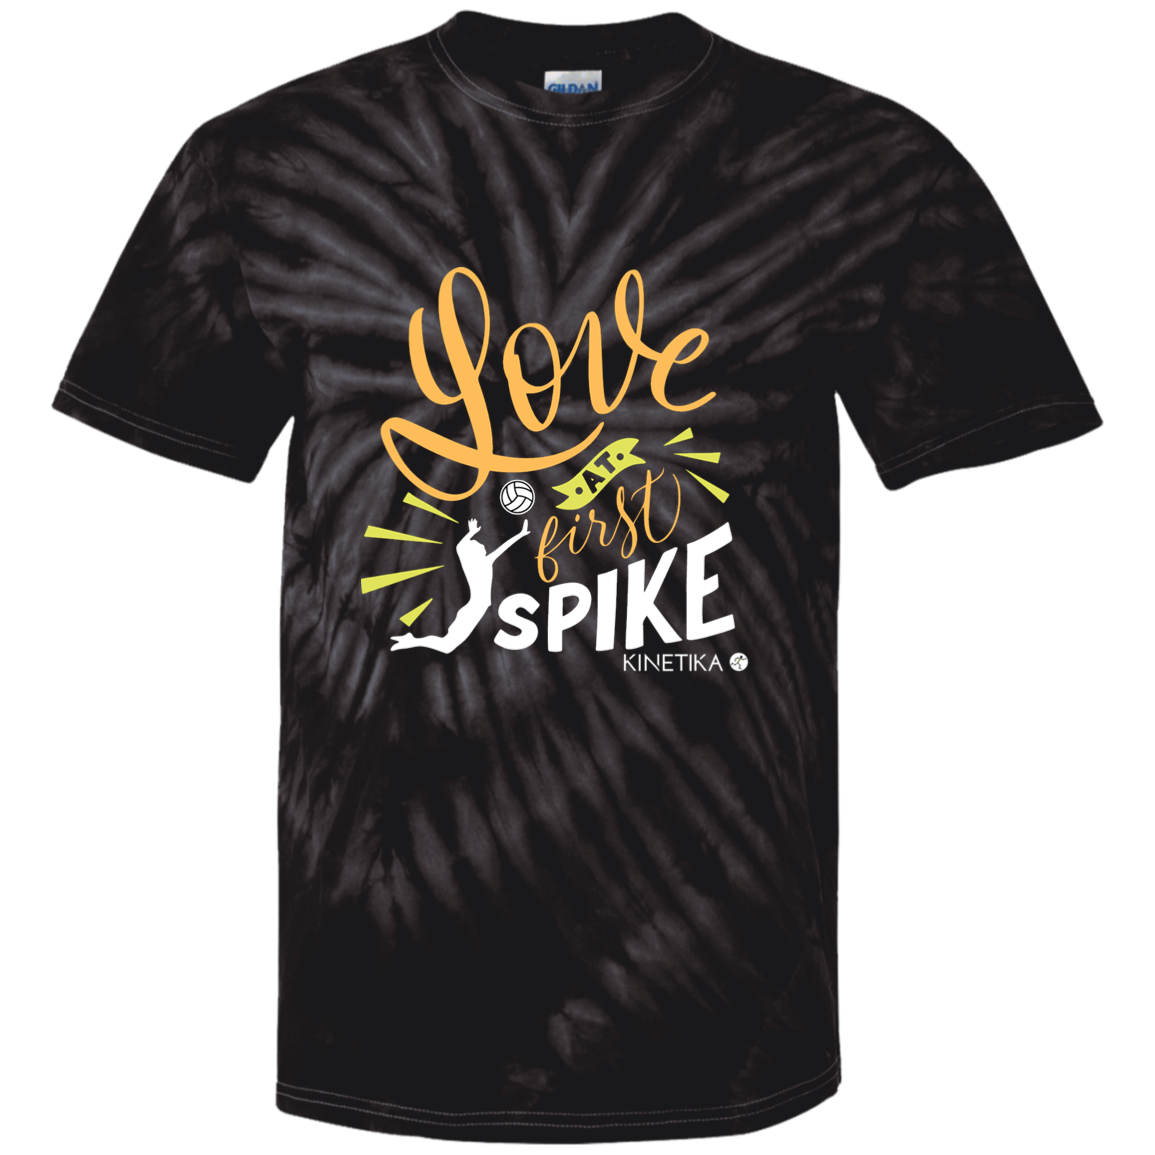 Spike - CD100Y Youth Tie Dye T-Shirt